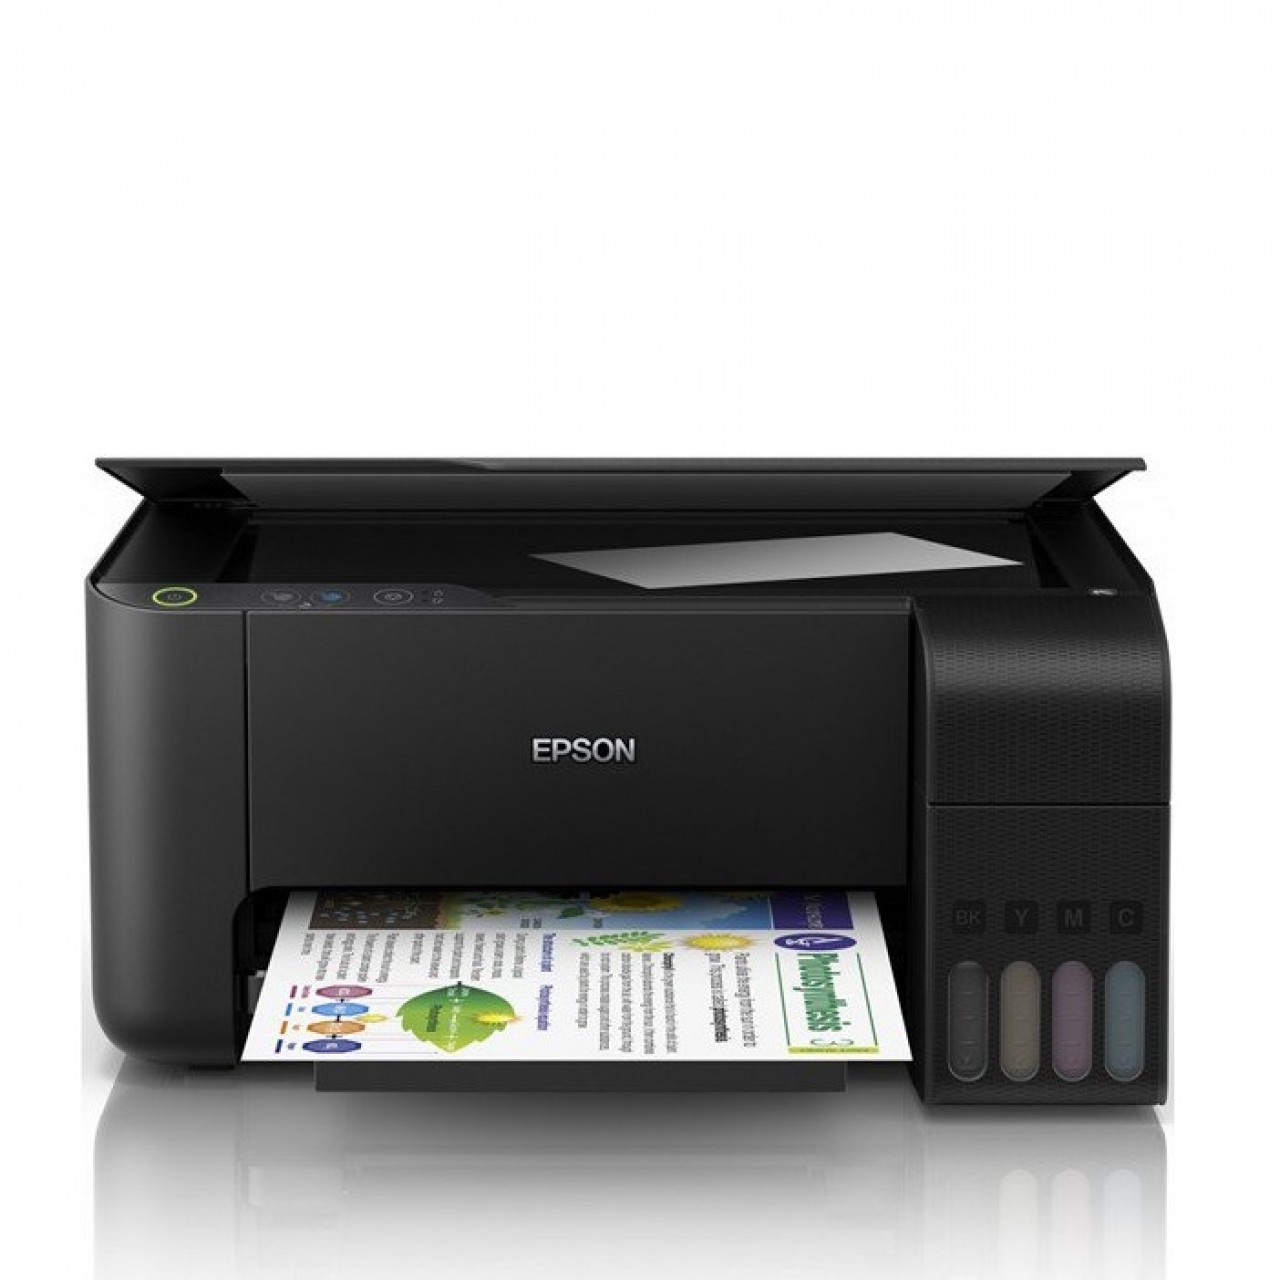 Epson Ink Tank Printer L3110 – All in One – Printer – Scanner - Copier